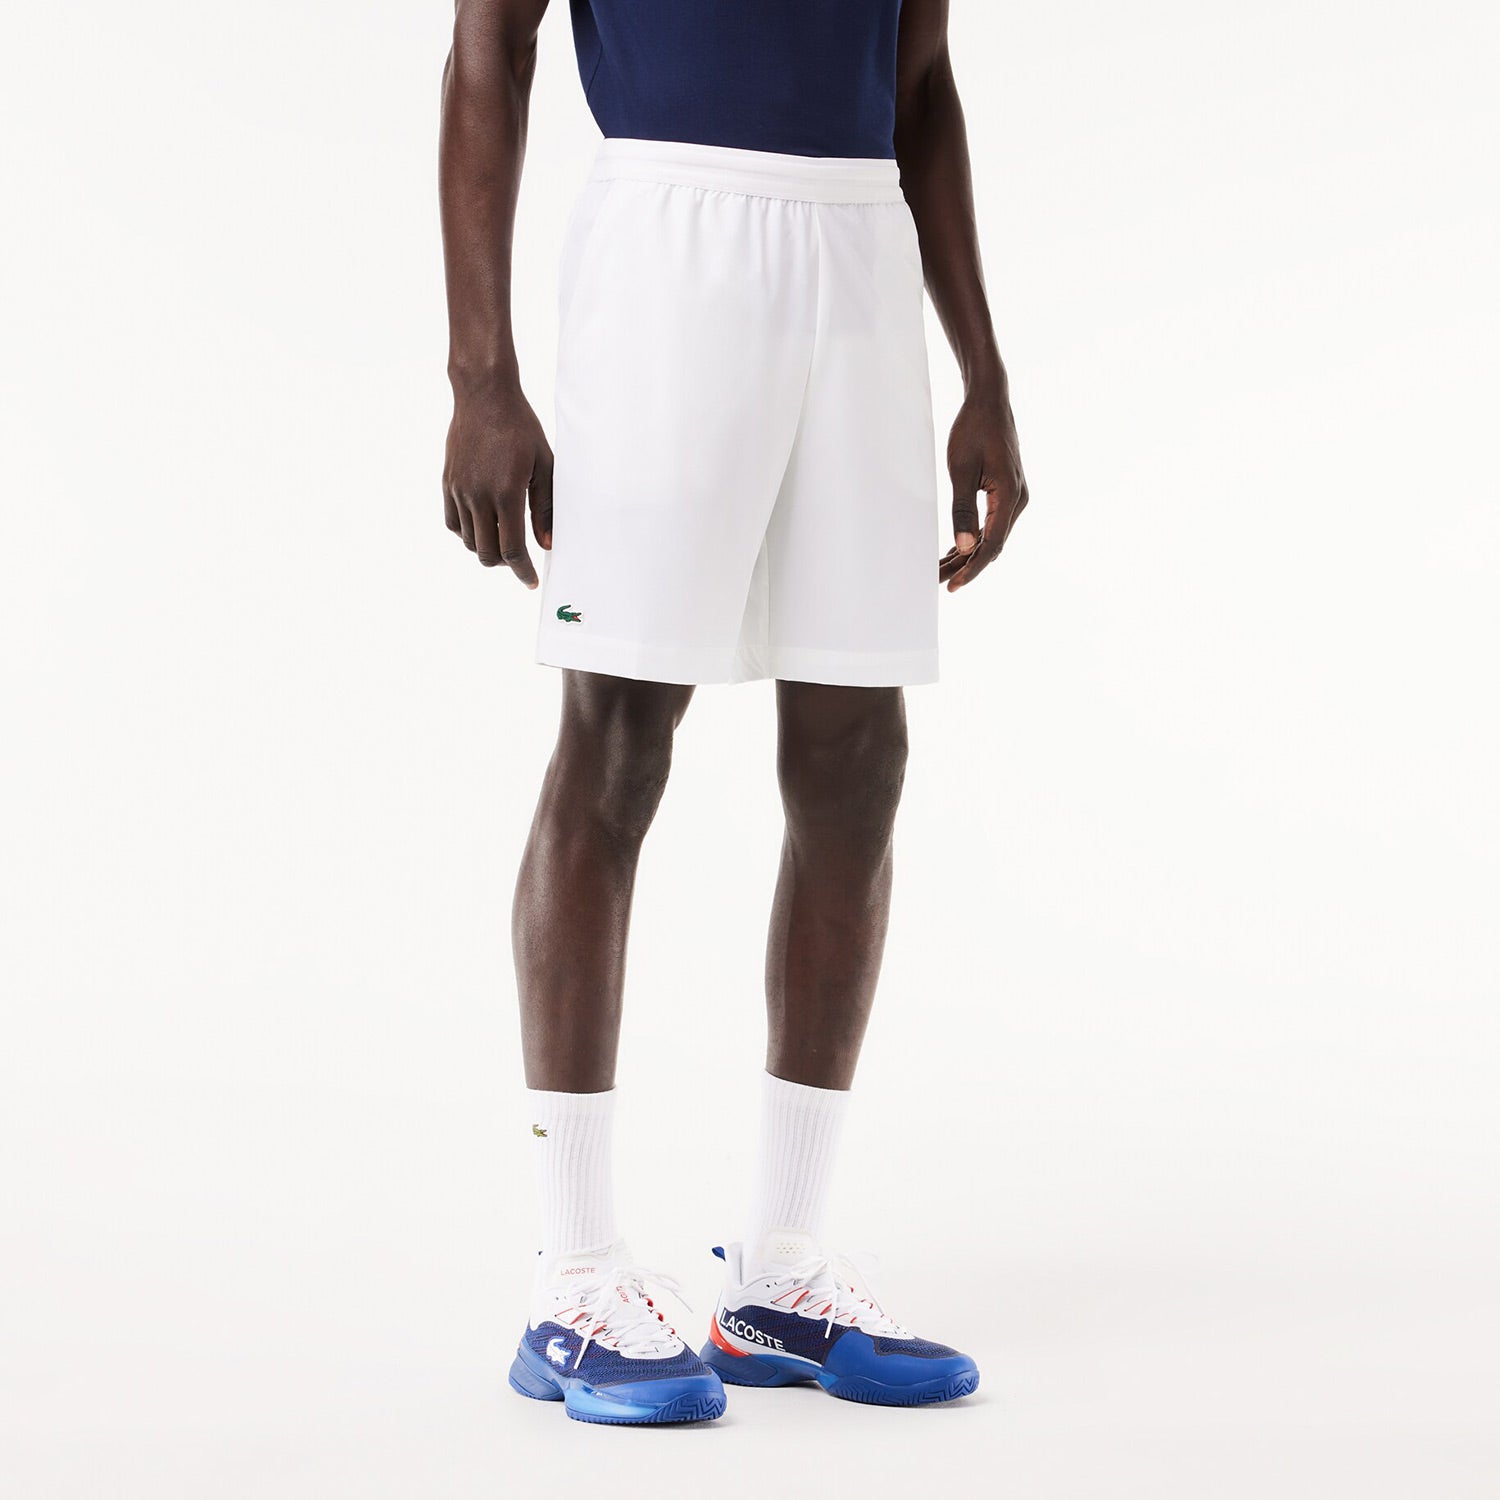 Lacoste Men's Technical Woven Tennis Shorts - White (1)